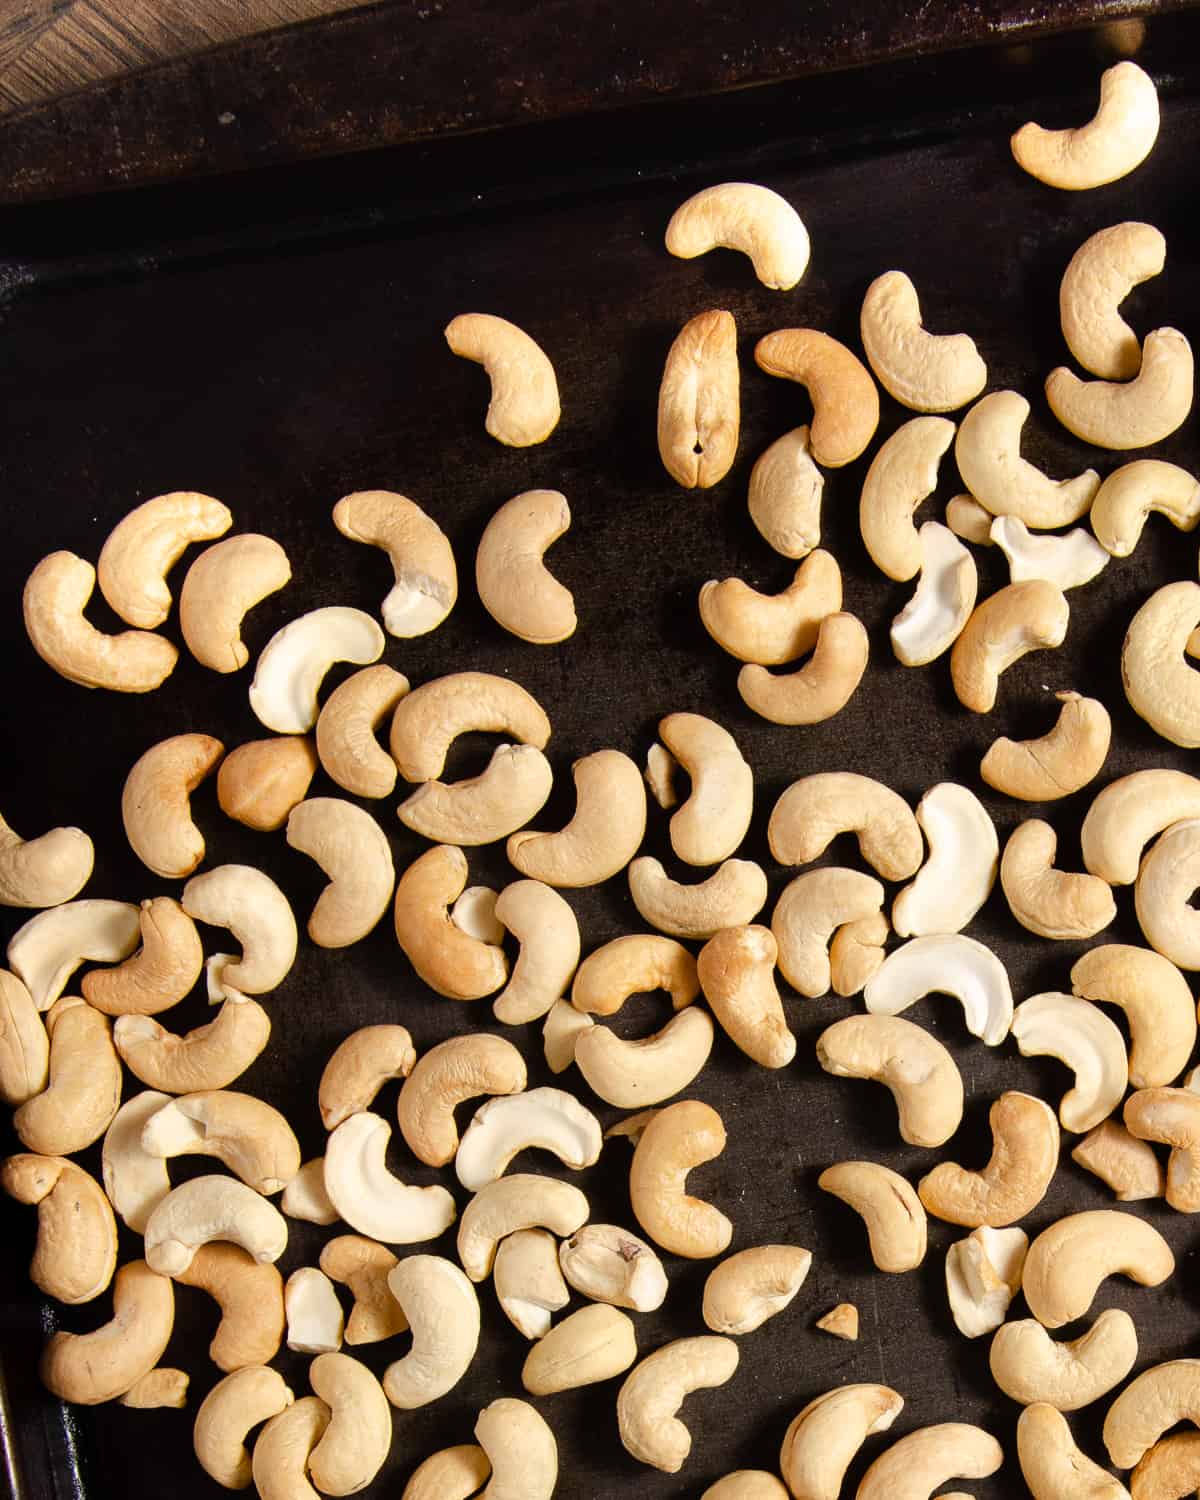 Roasted cashews on a baking tray.